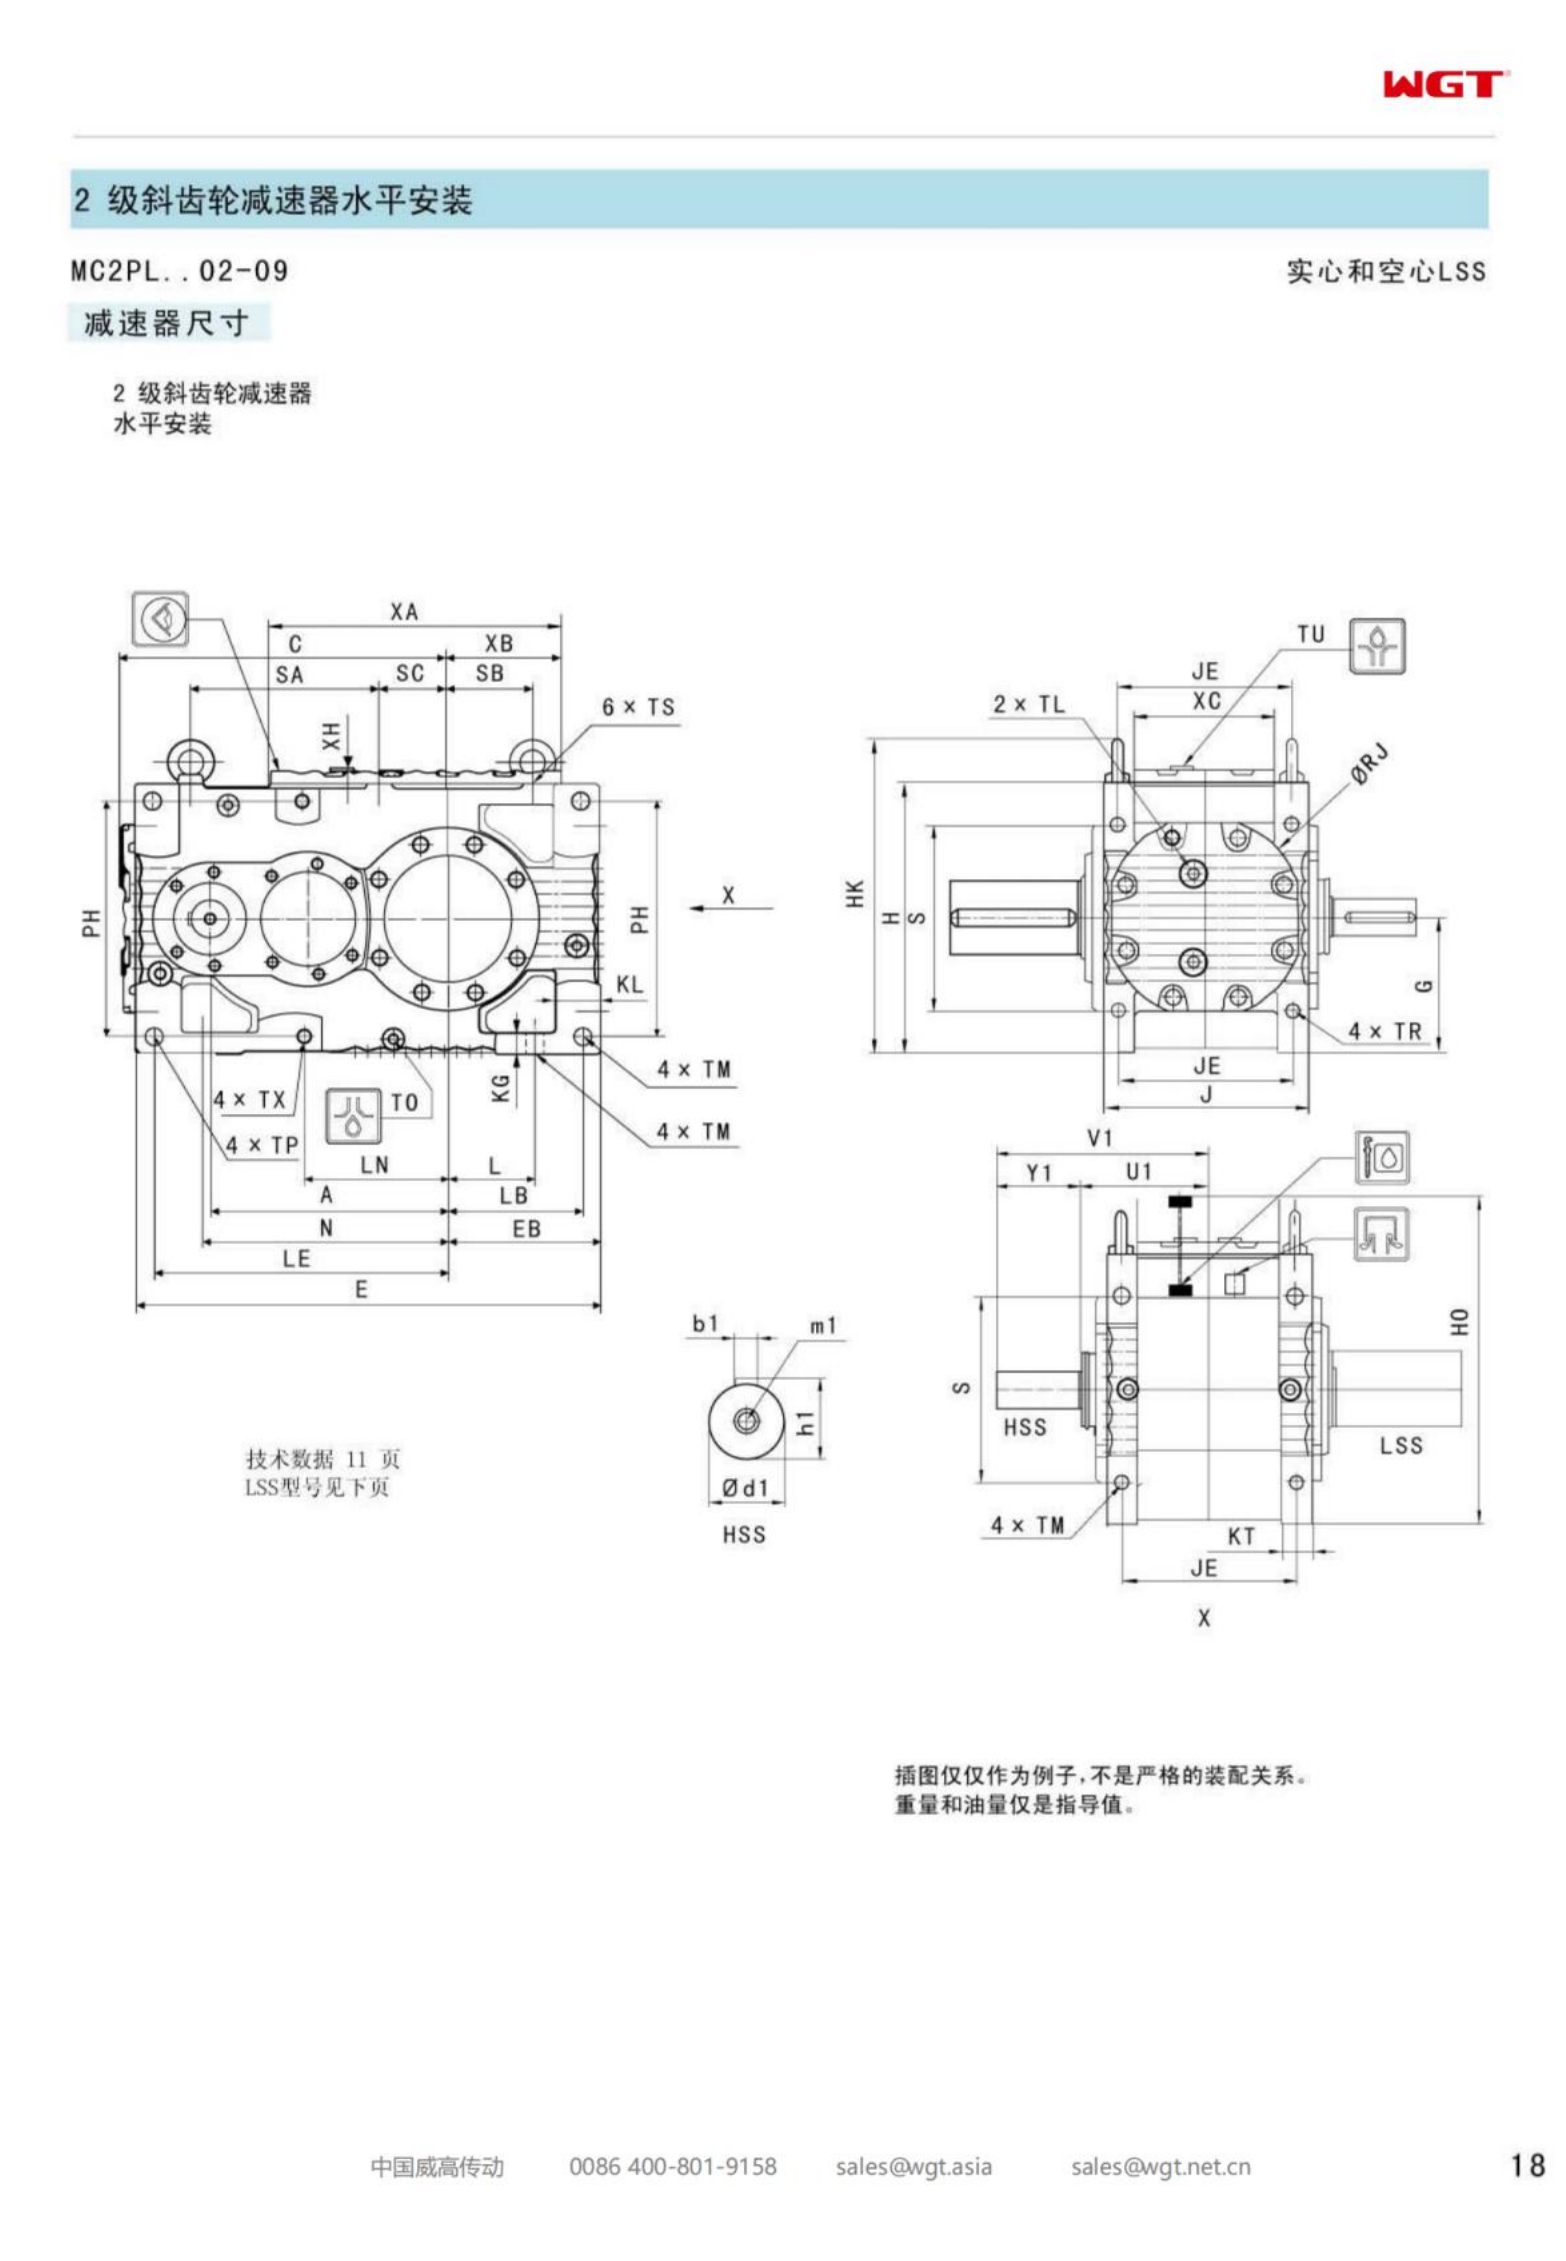 MC2PLHF04 replaces _SEW_MC_Series gearbox (patent)